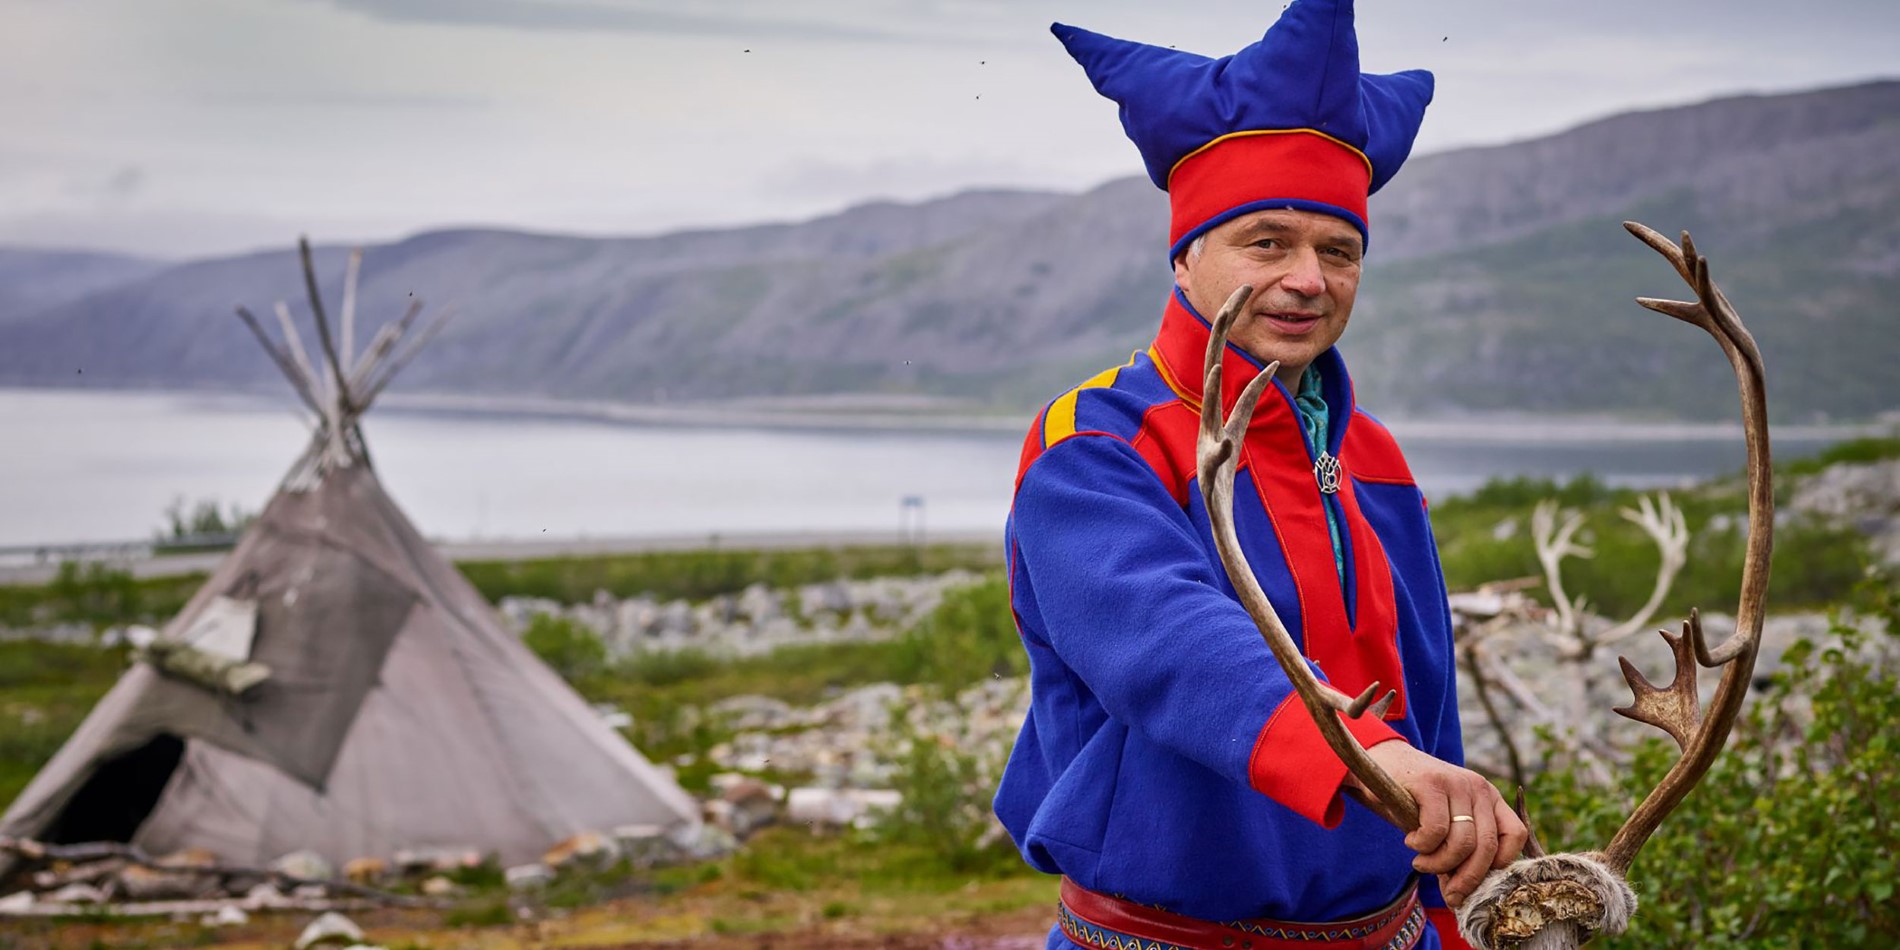 Cultures Of Norway The Sami People Hurtigruten Norwegian Coastal Express